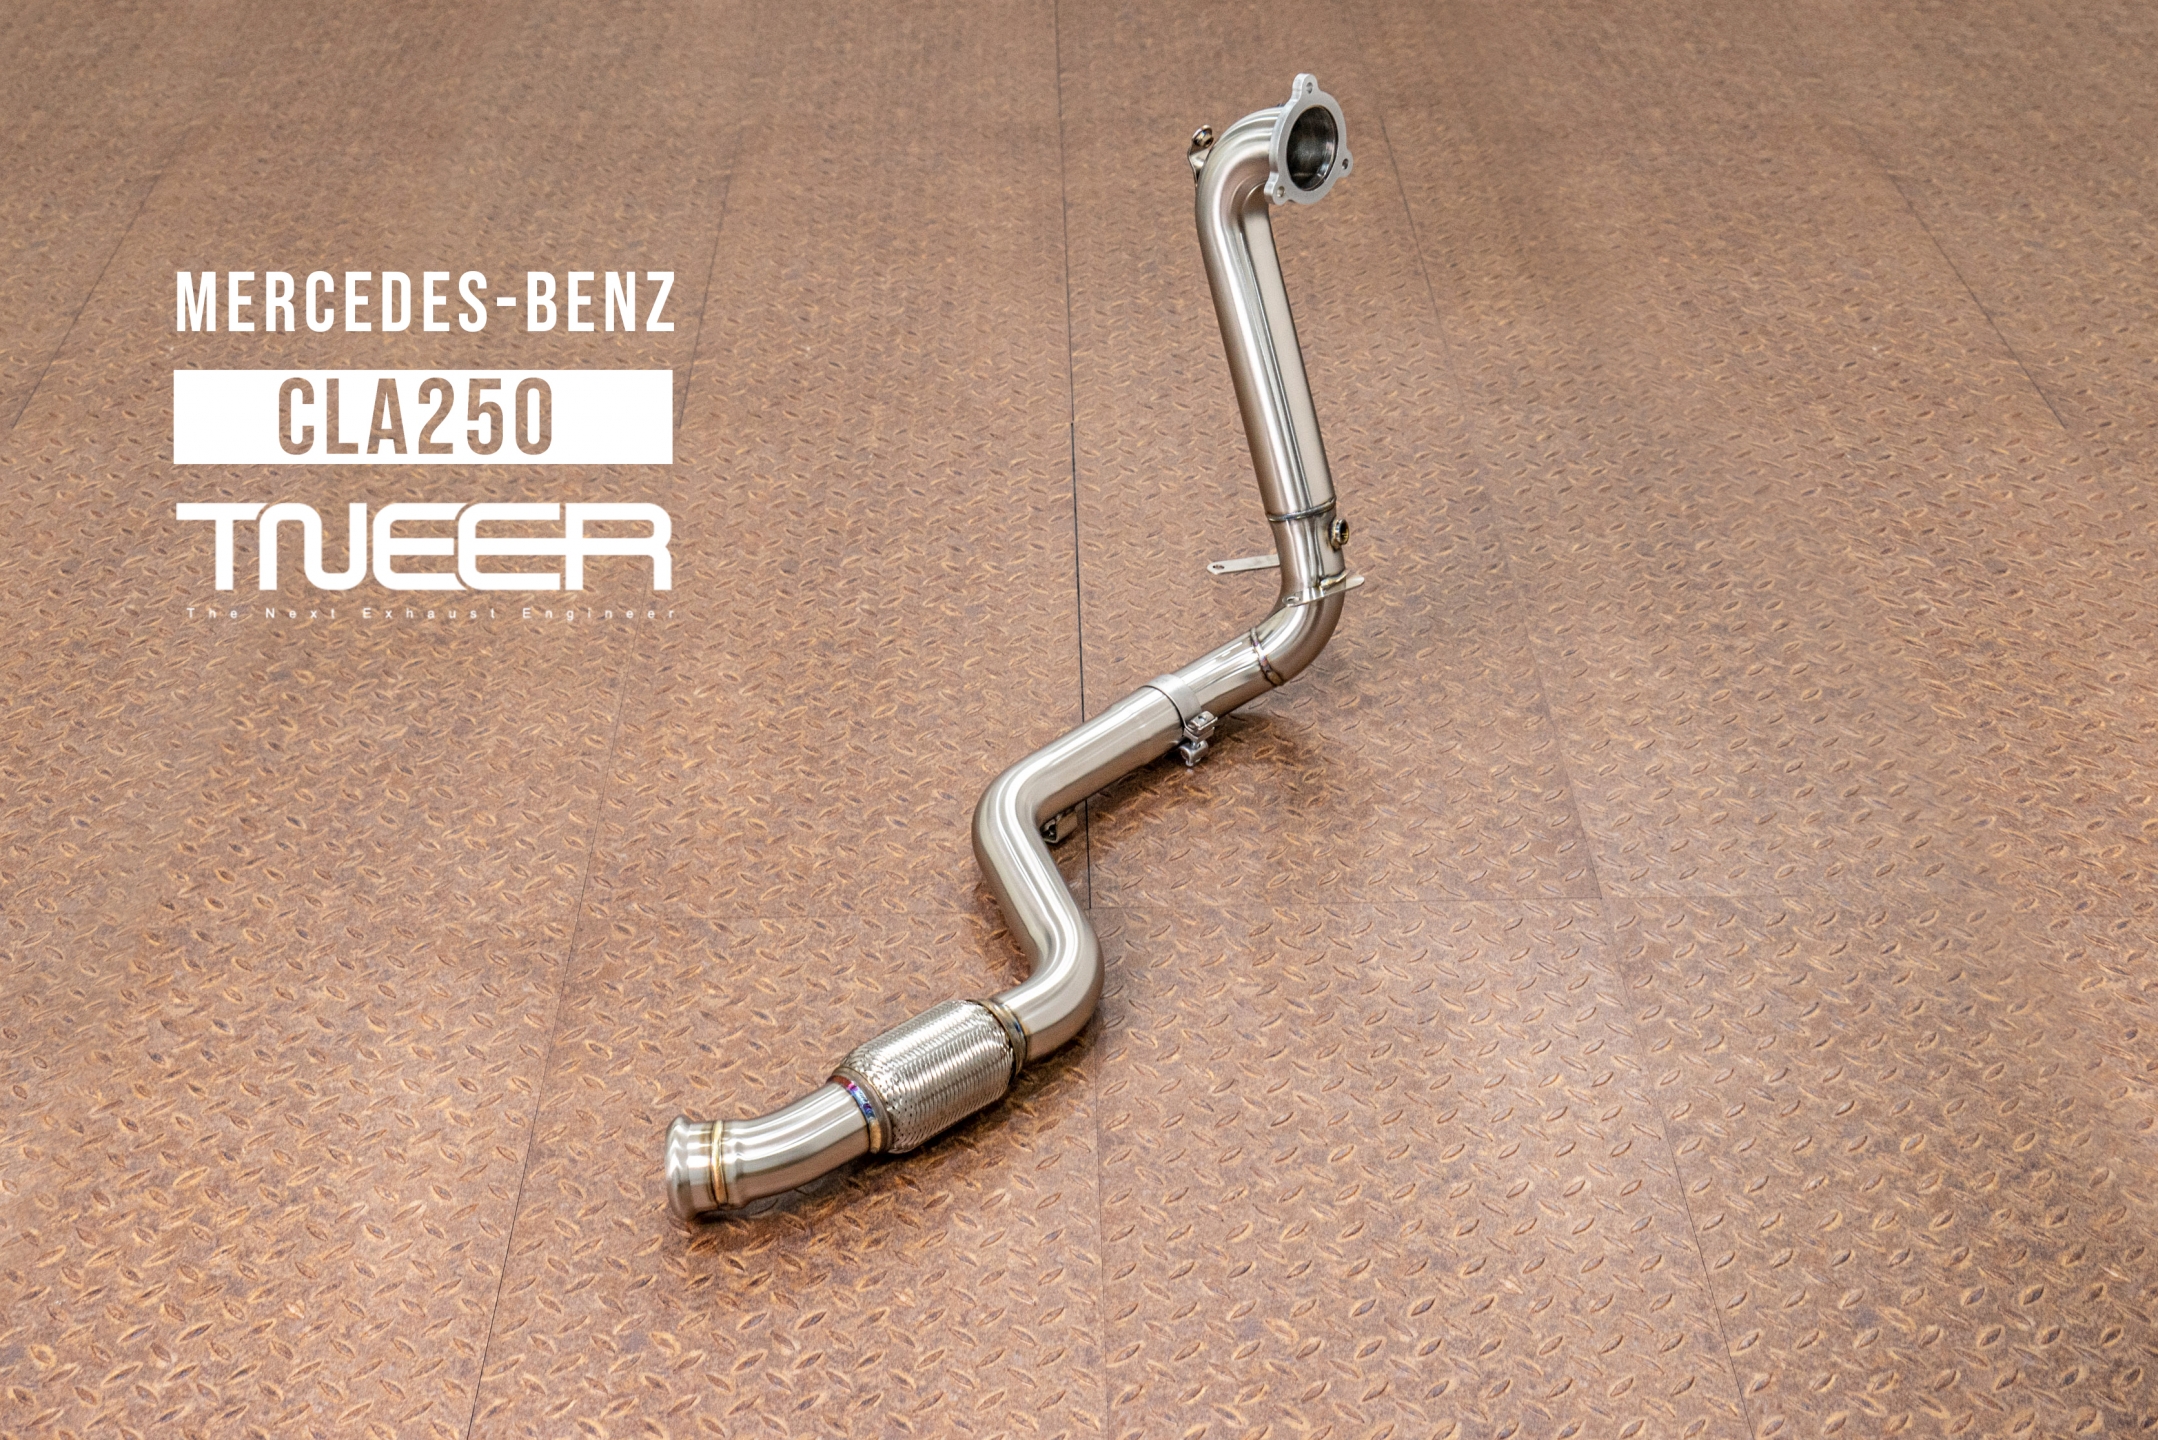 Mercedes-Benz C117 CLA250 Performance TNEER Exhaust System